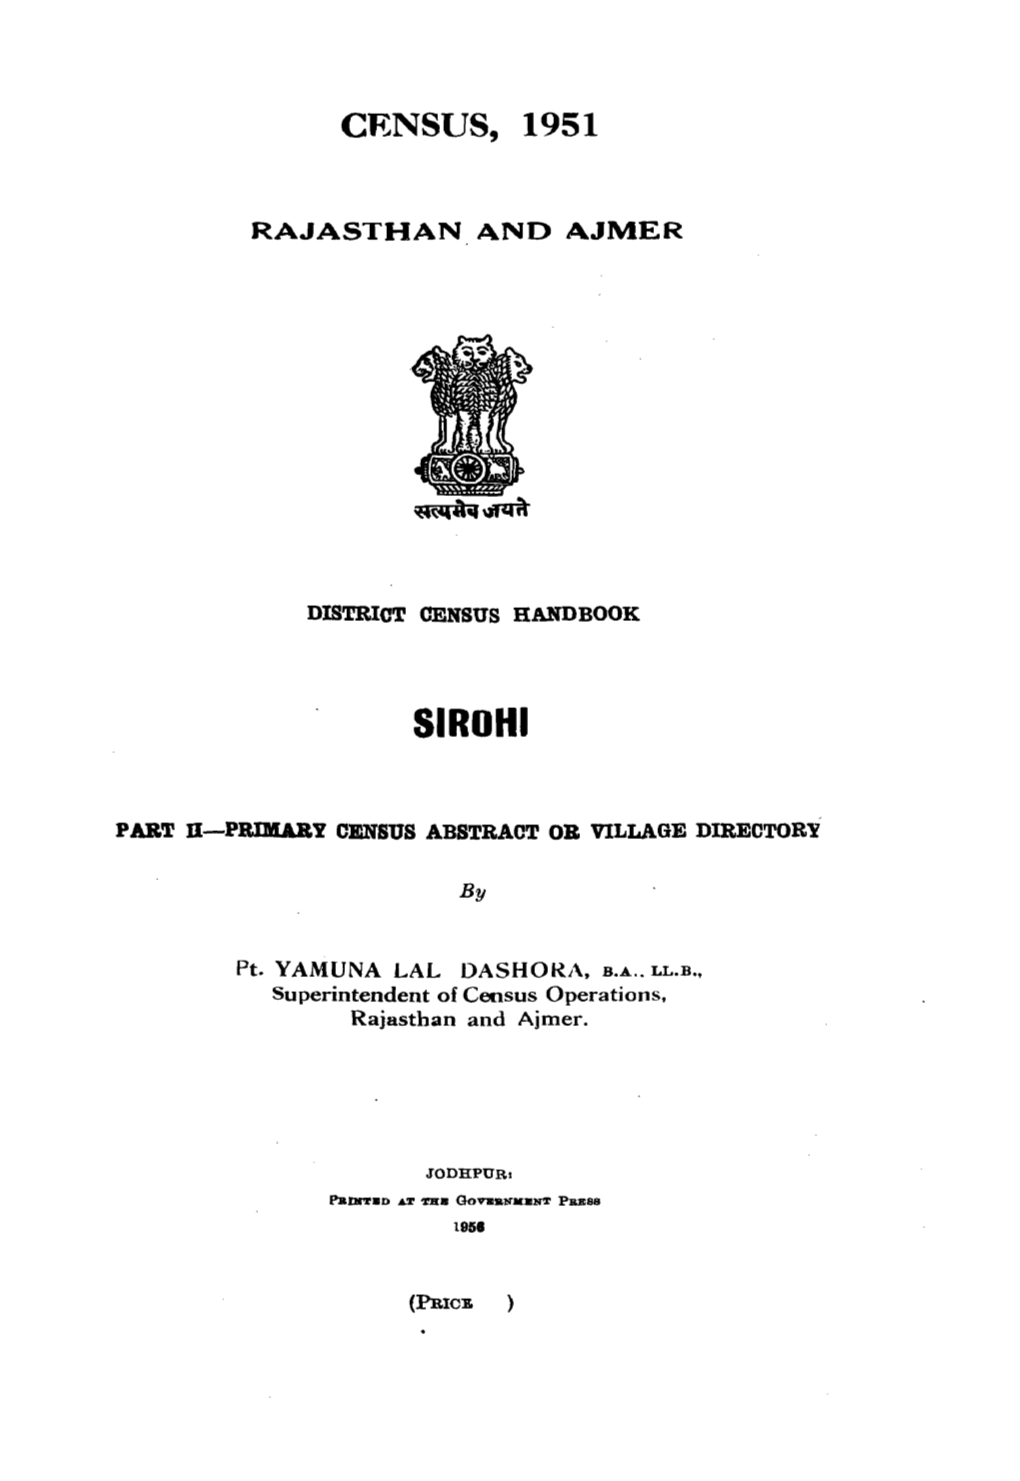 District Census Handbook, Sirohi, Part II, Rajasthan and Ajmer